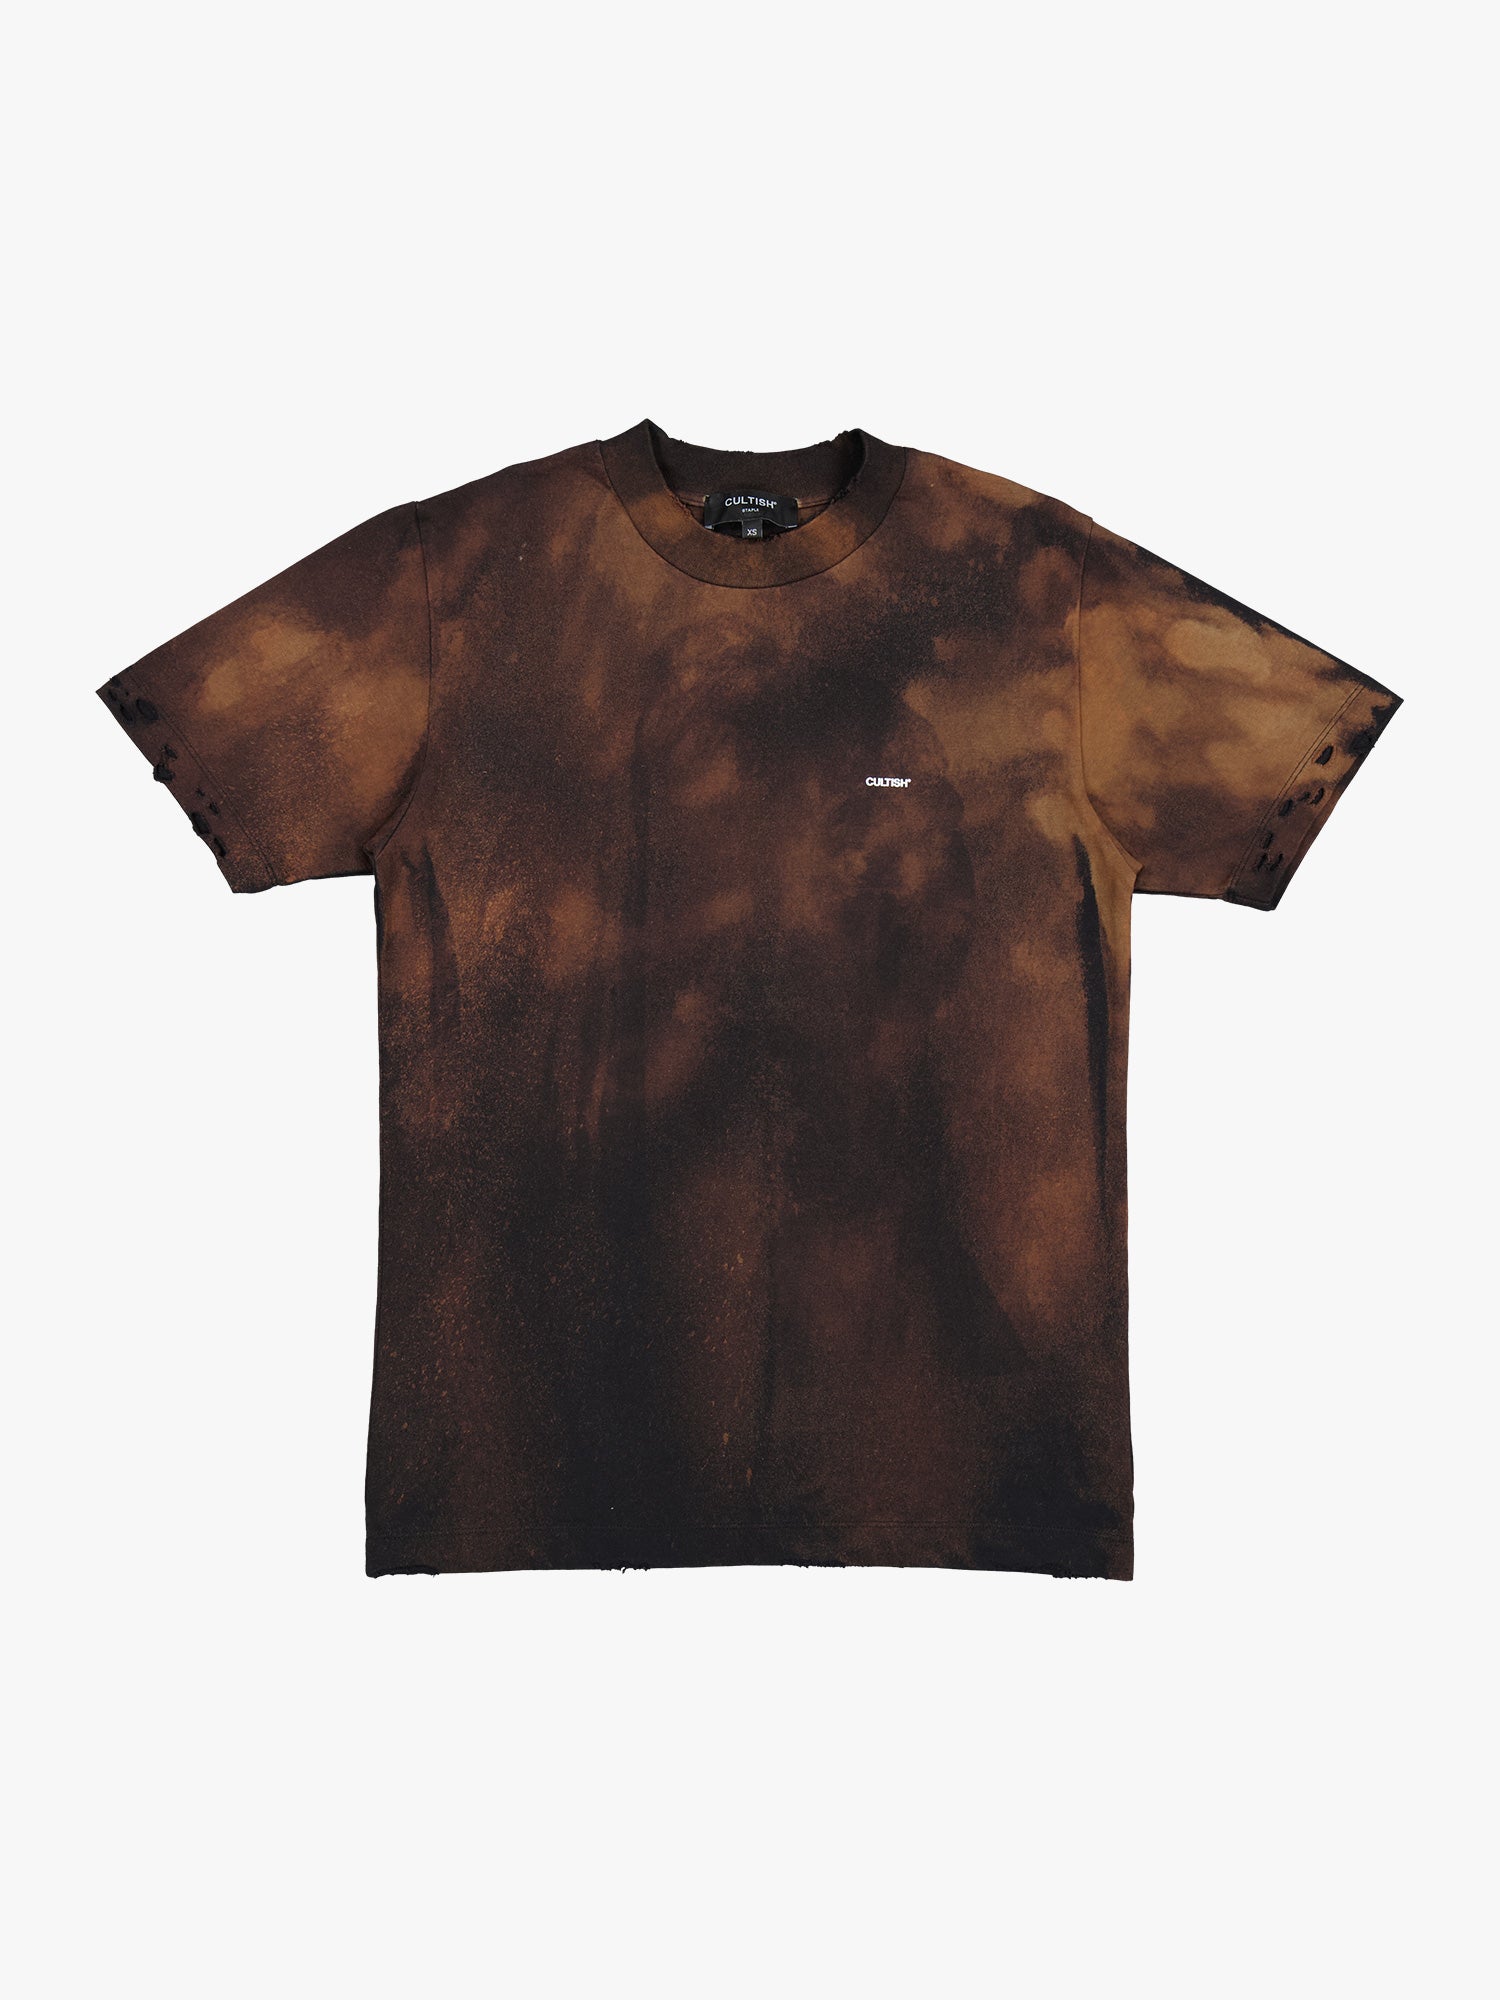 ⓔ Distressed Staple T-Shirt